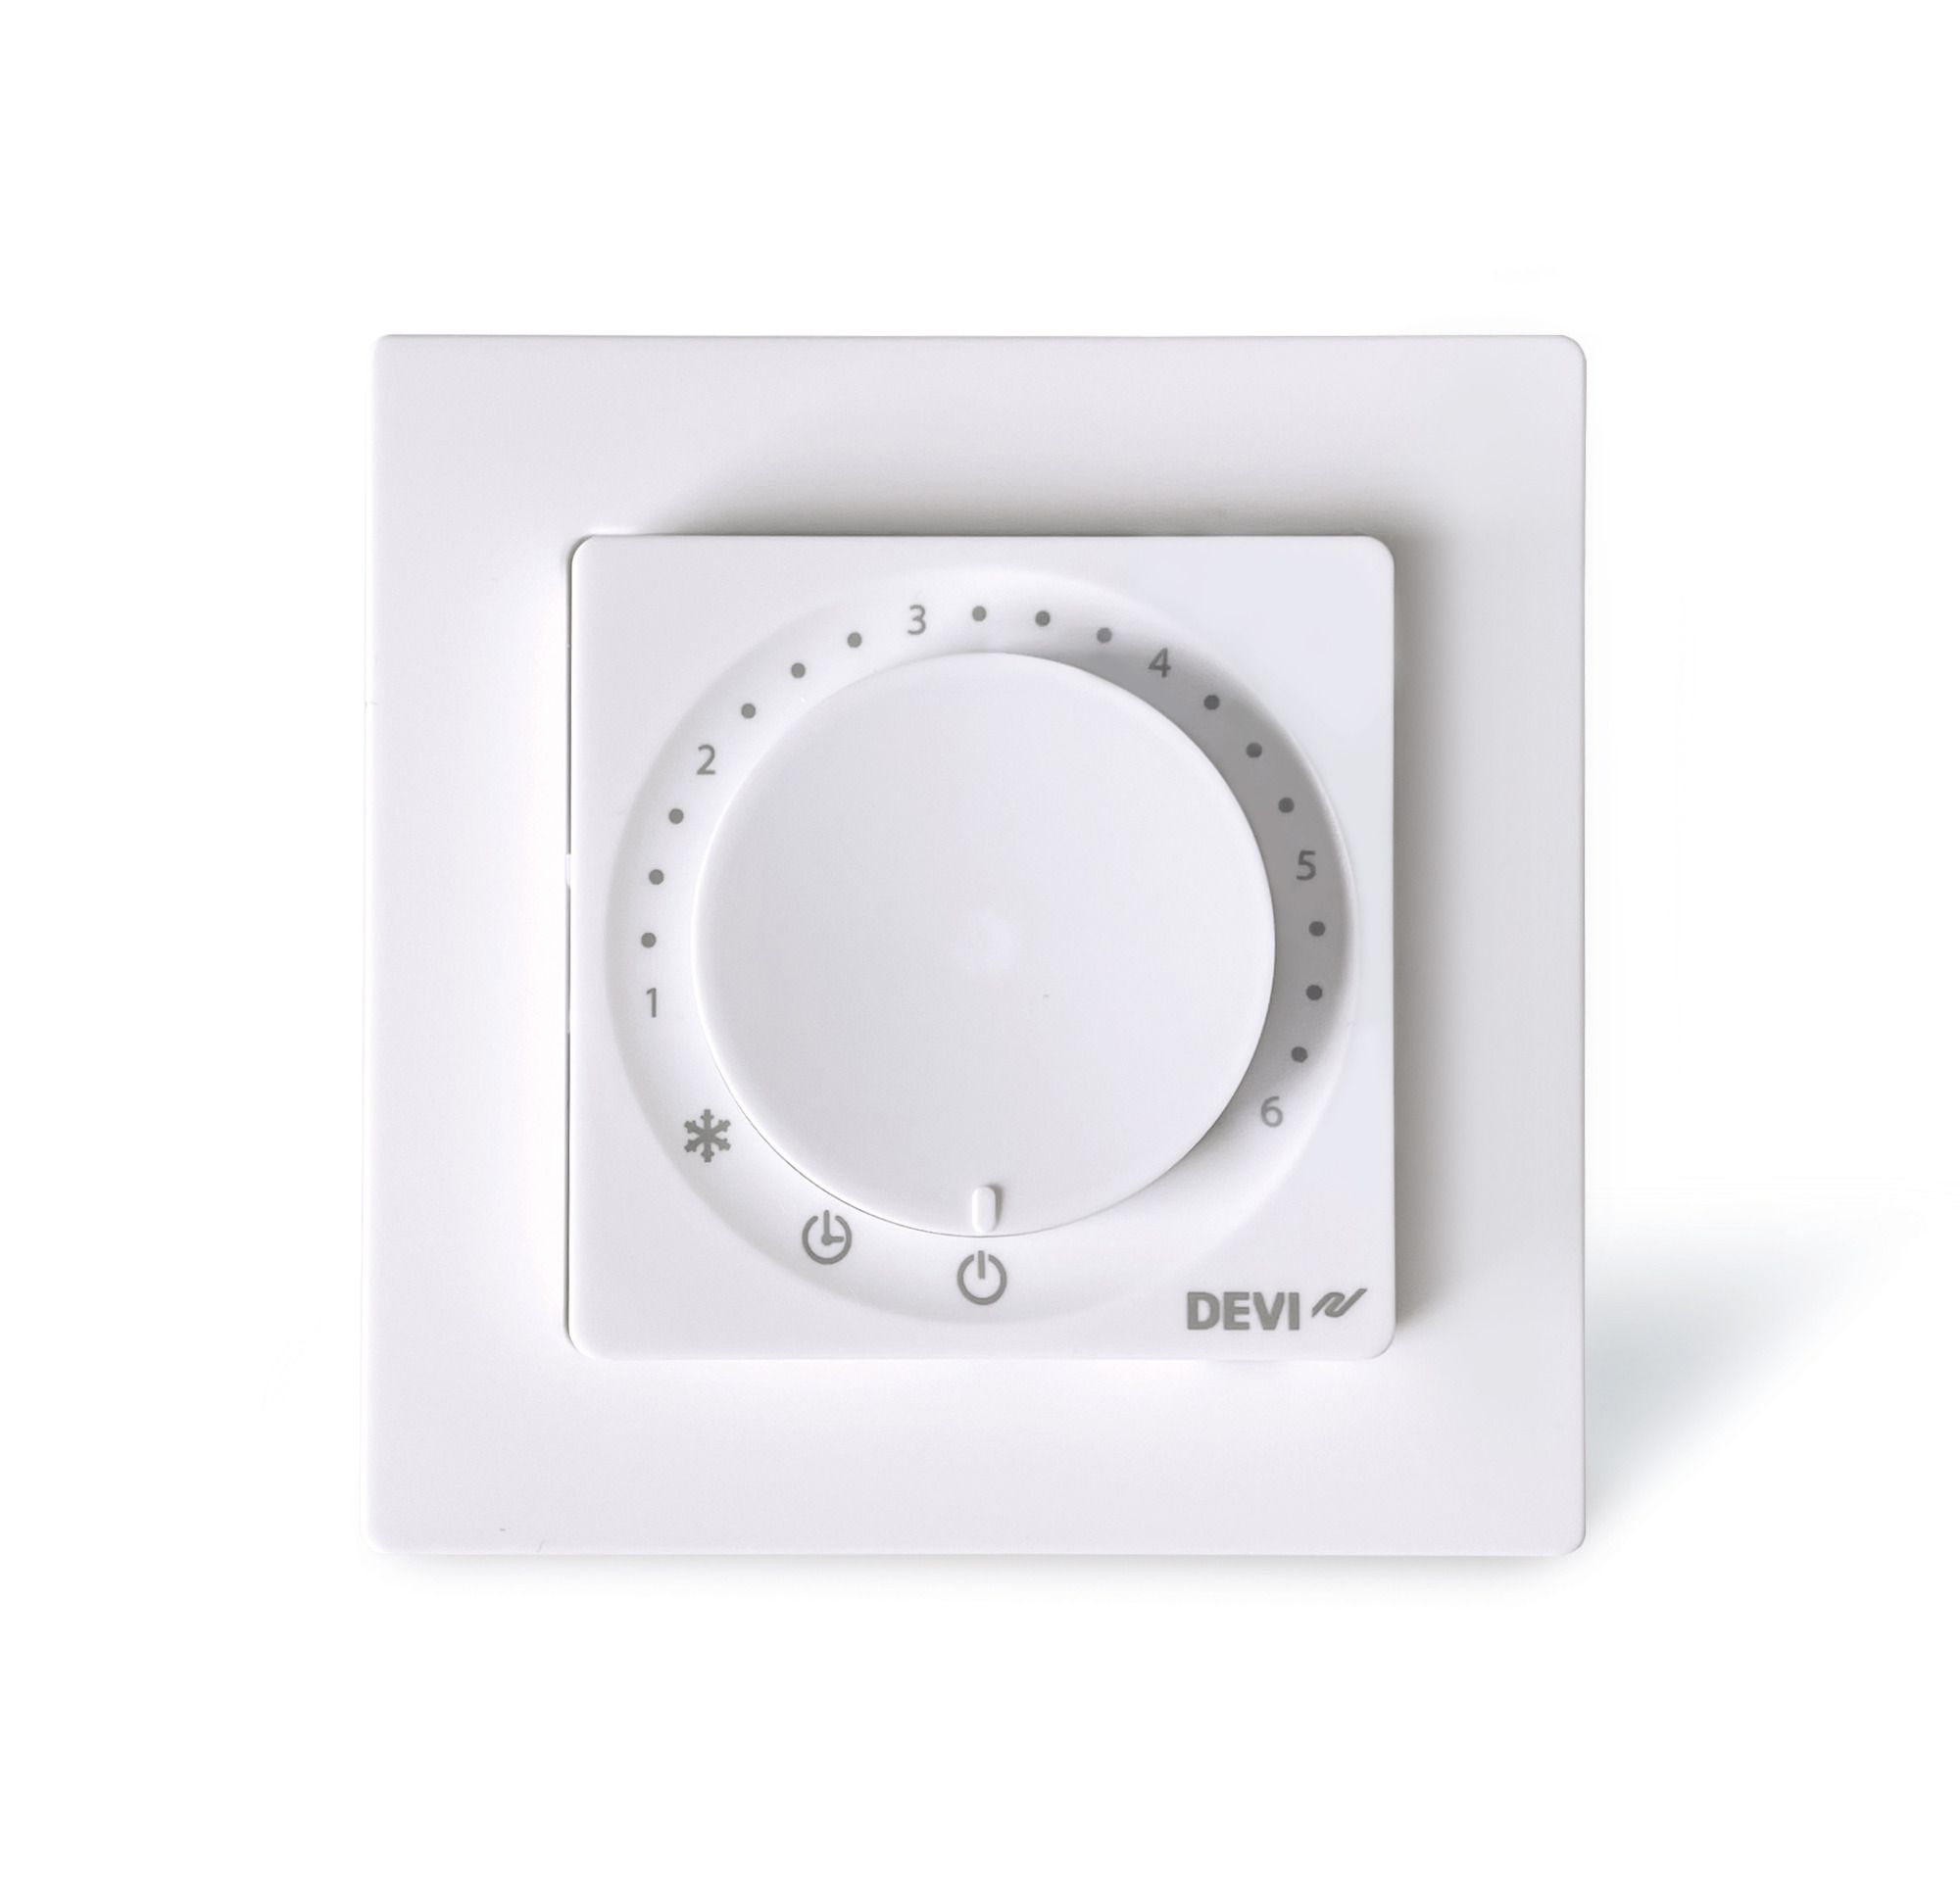 Devi 140F1160 Progammierbarer Fussbodenboden-Thermostat